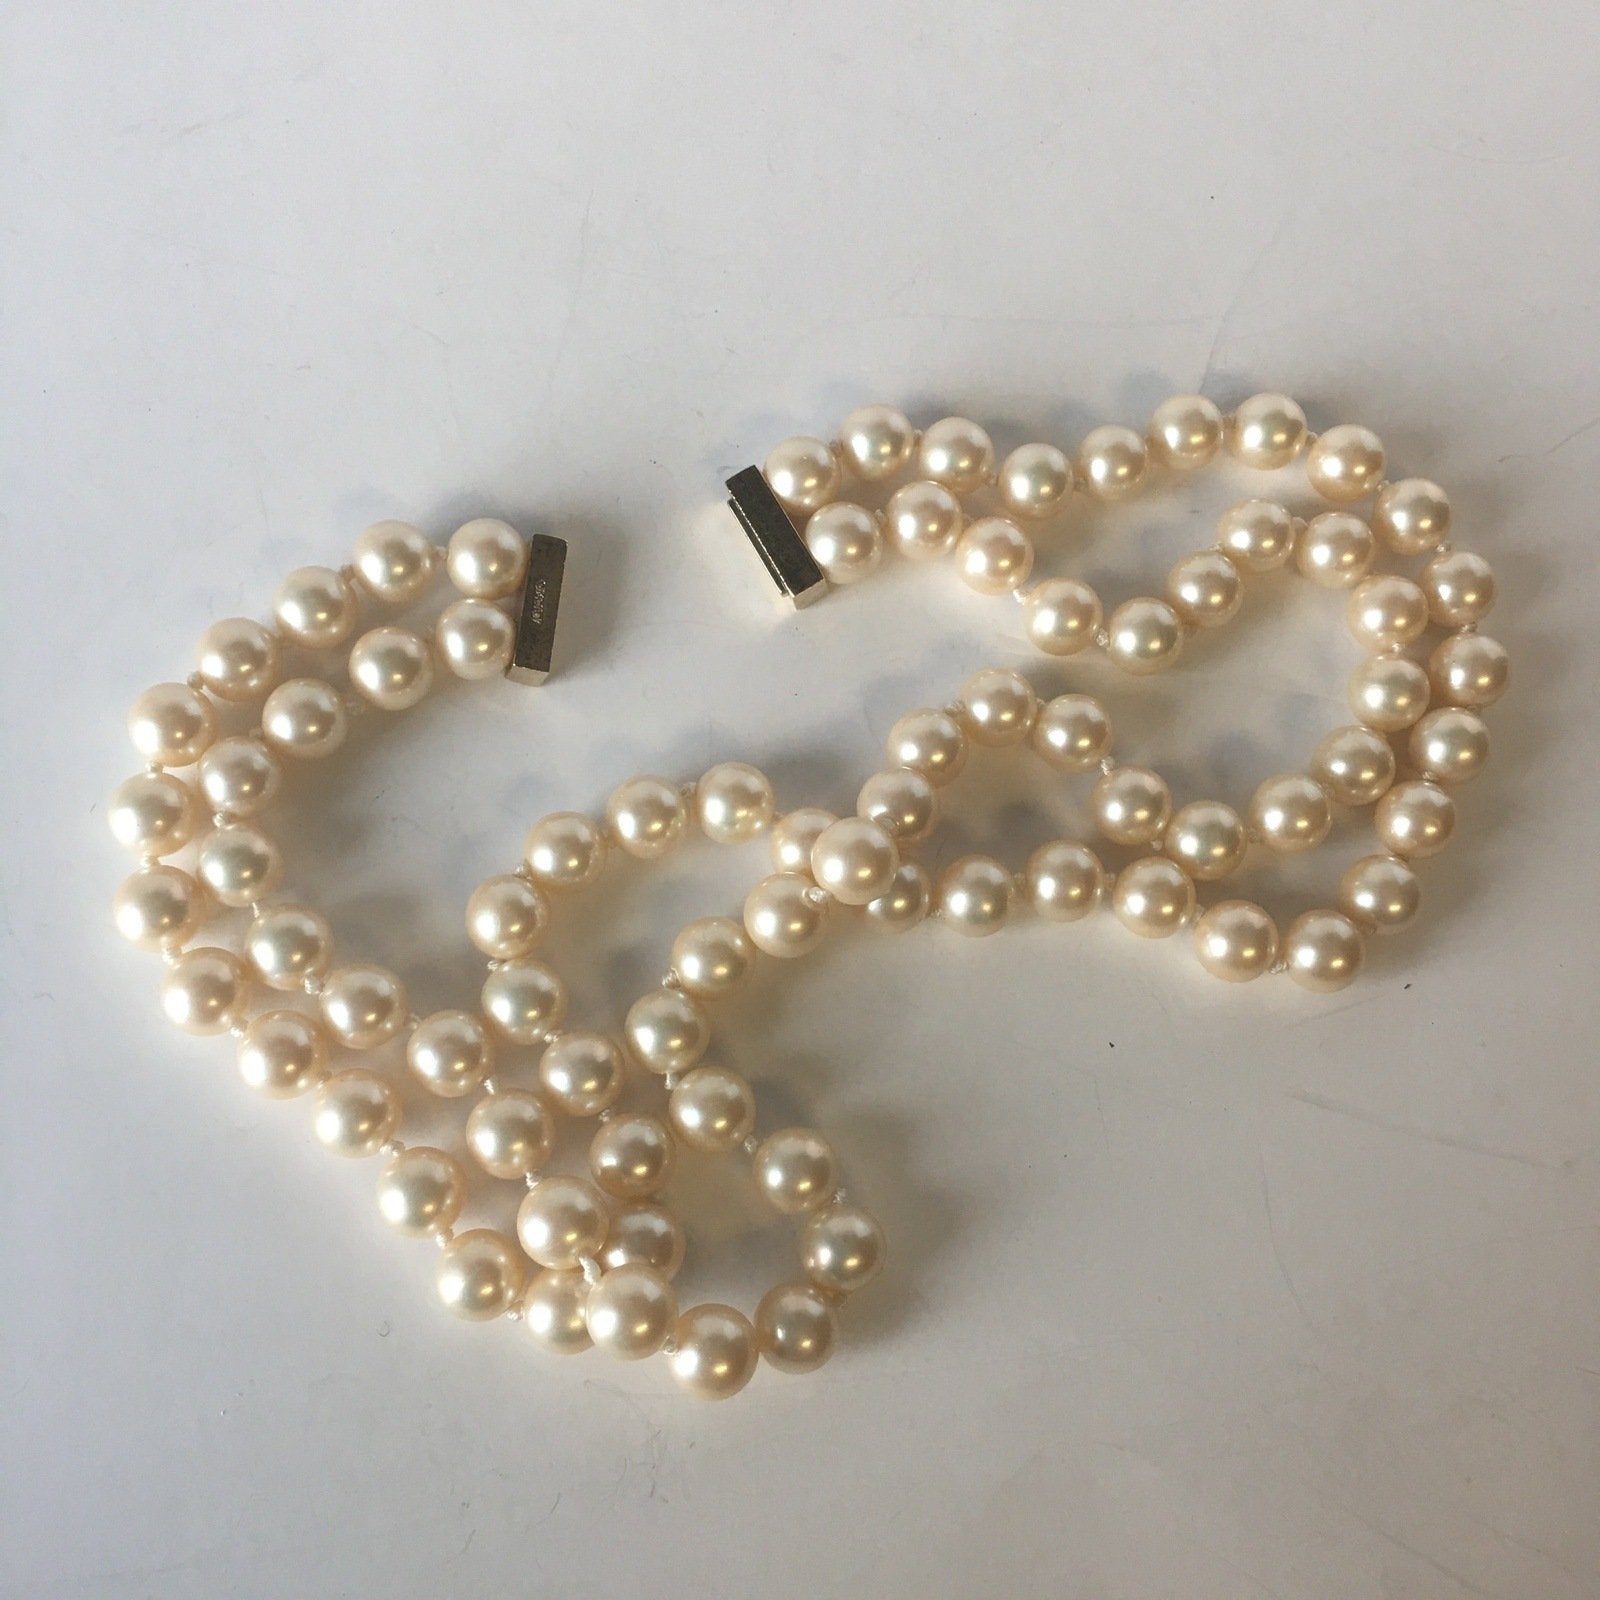 Monet Pearls Beaded Necklace Rhinestone Clasp Vintage Jewelry